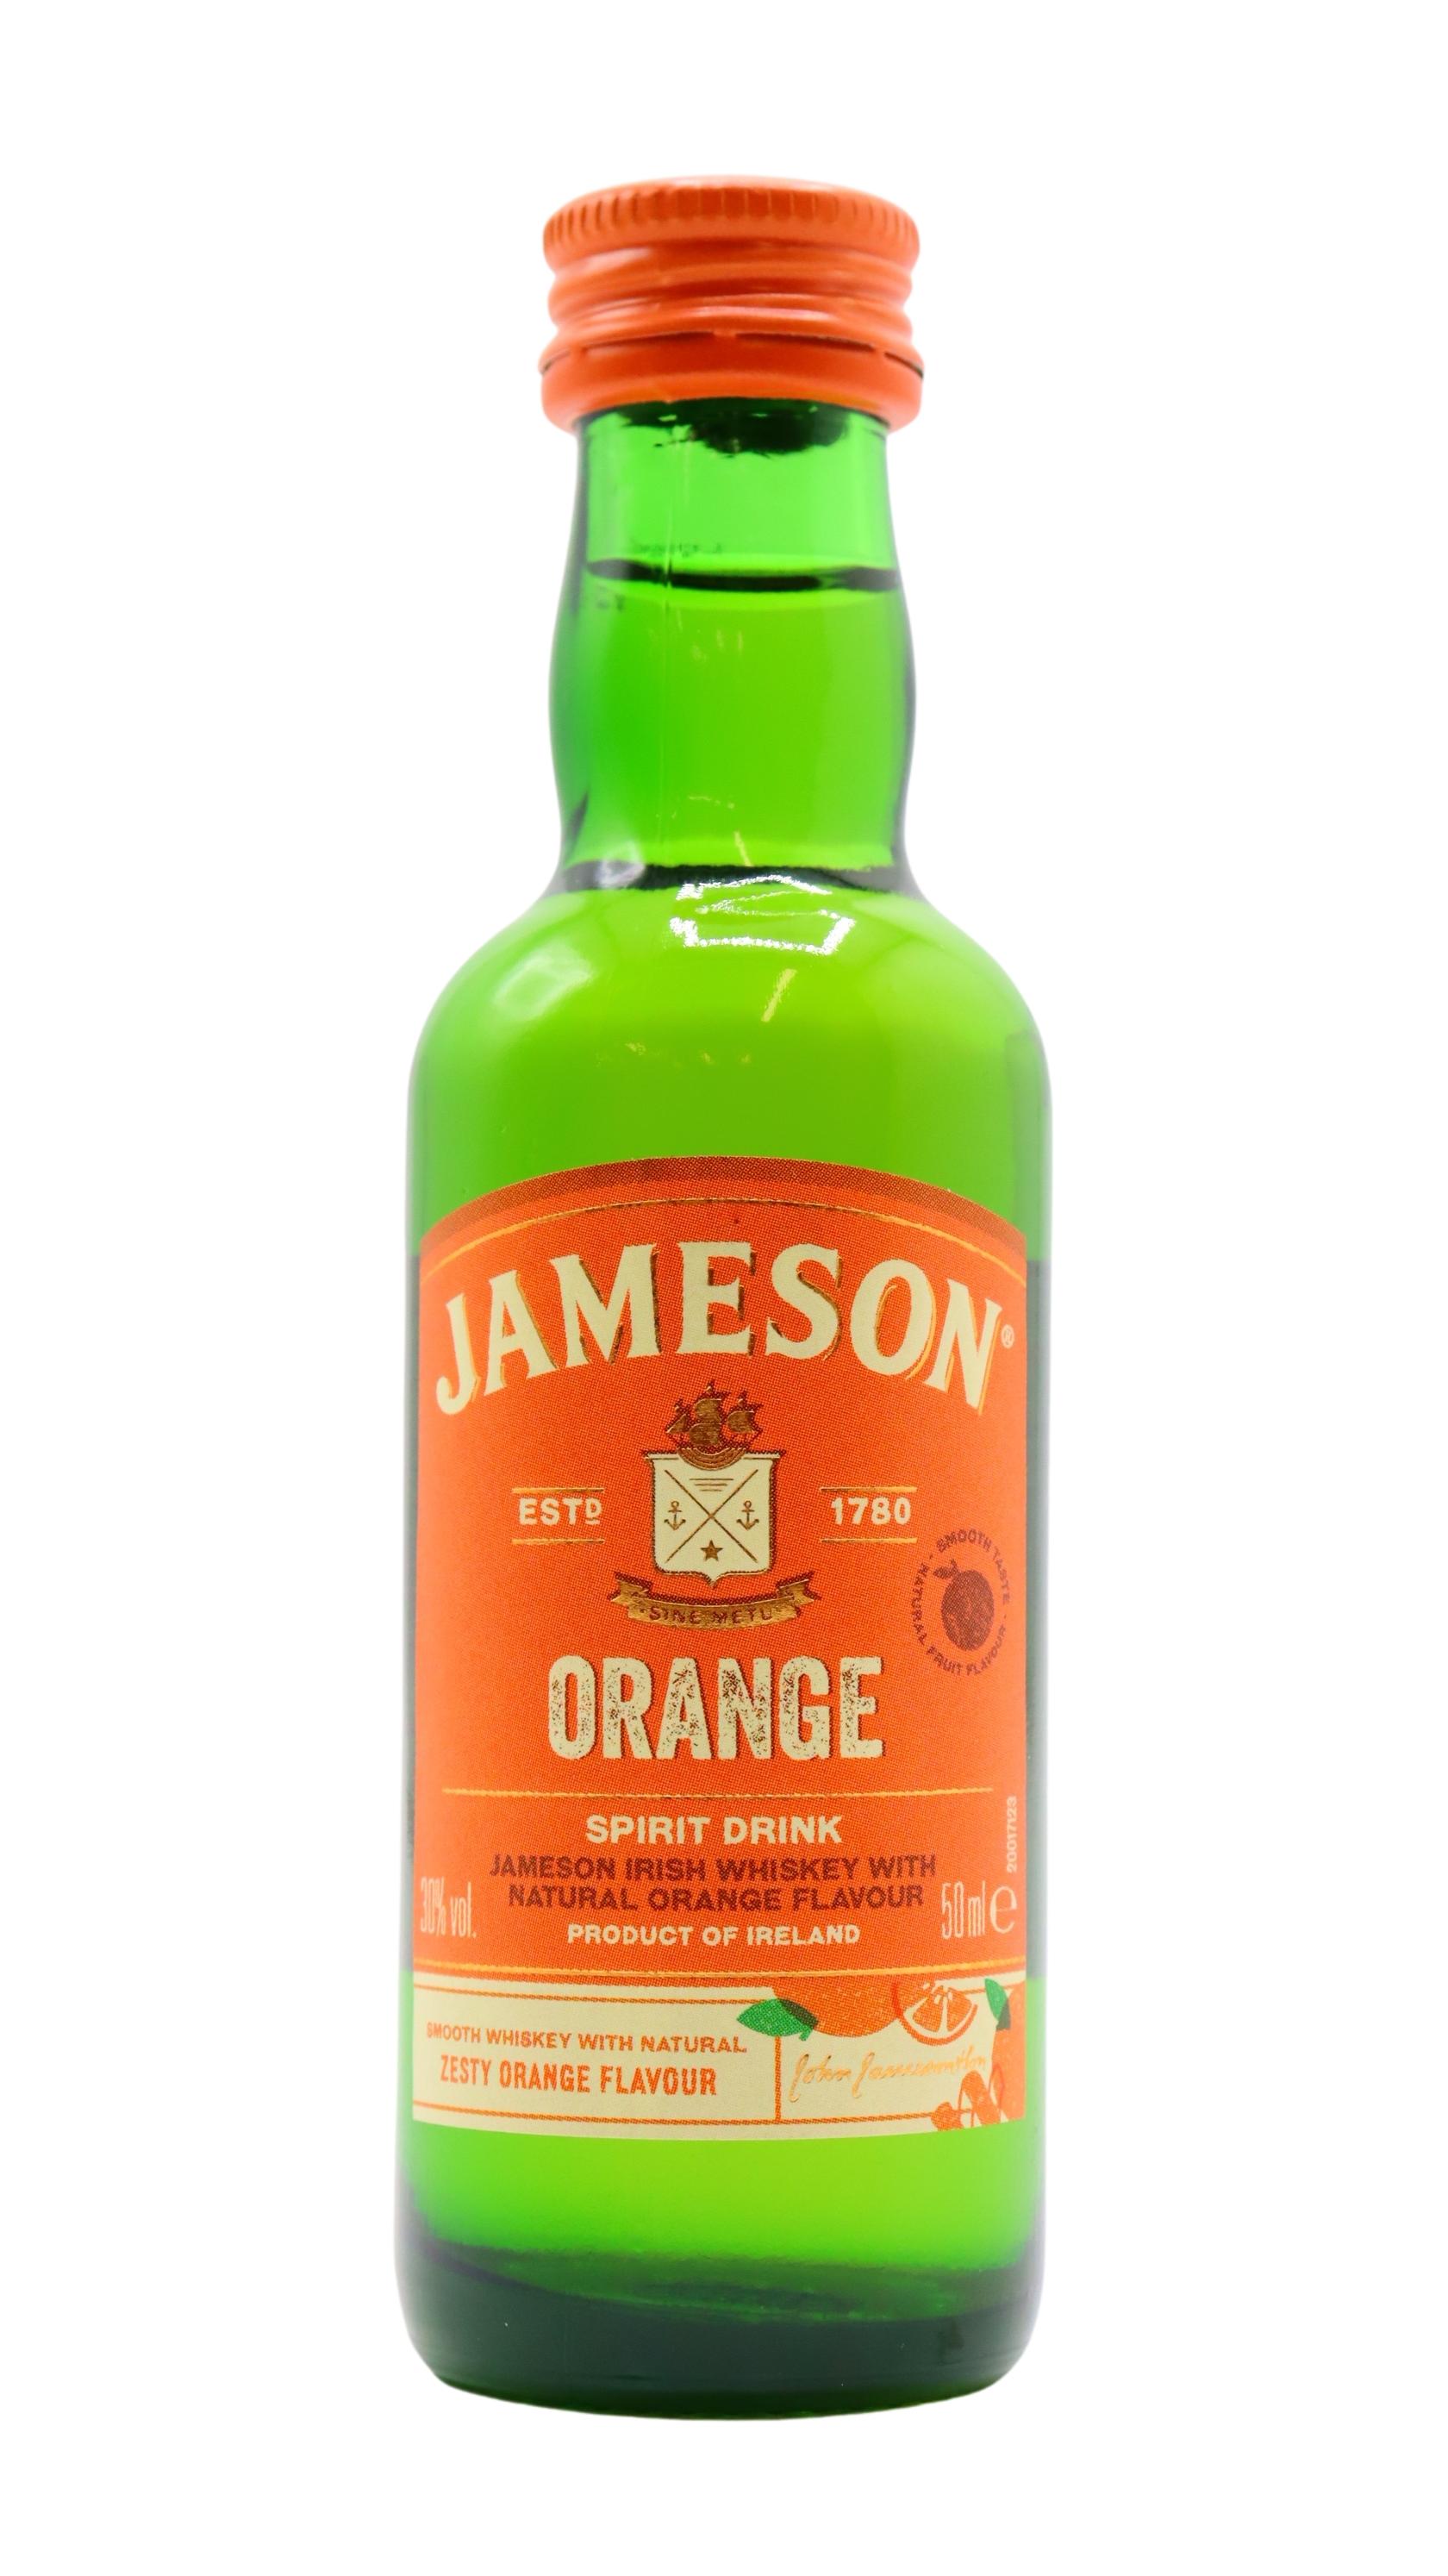 Jameson Mini Bottle Gift Set Price & Reviews